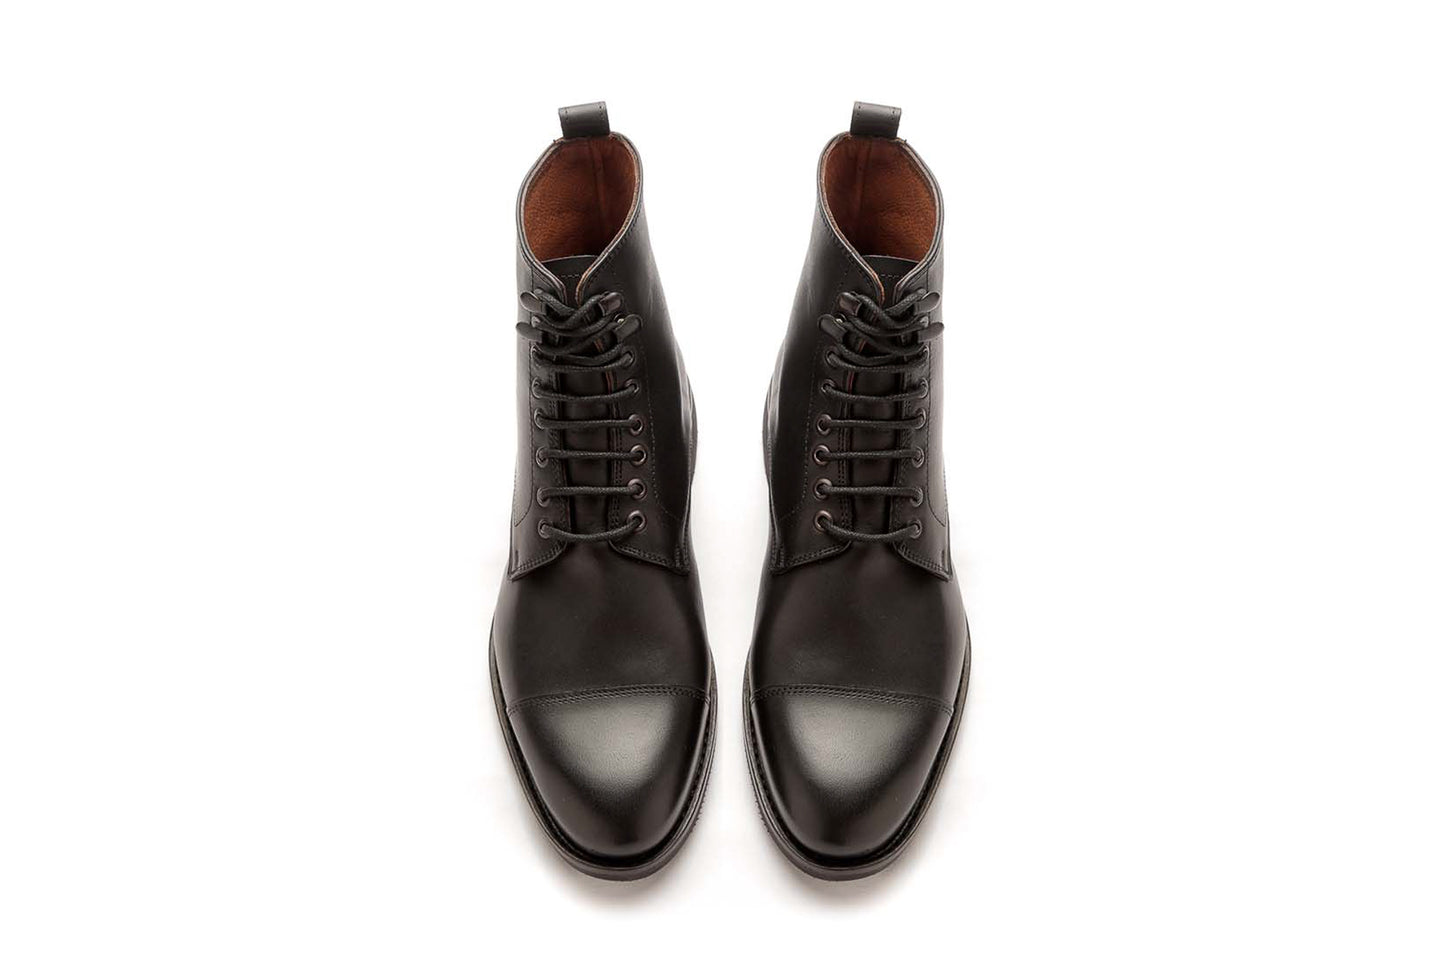 Boot 656 Black